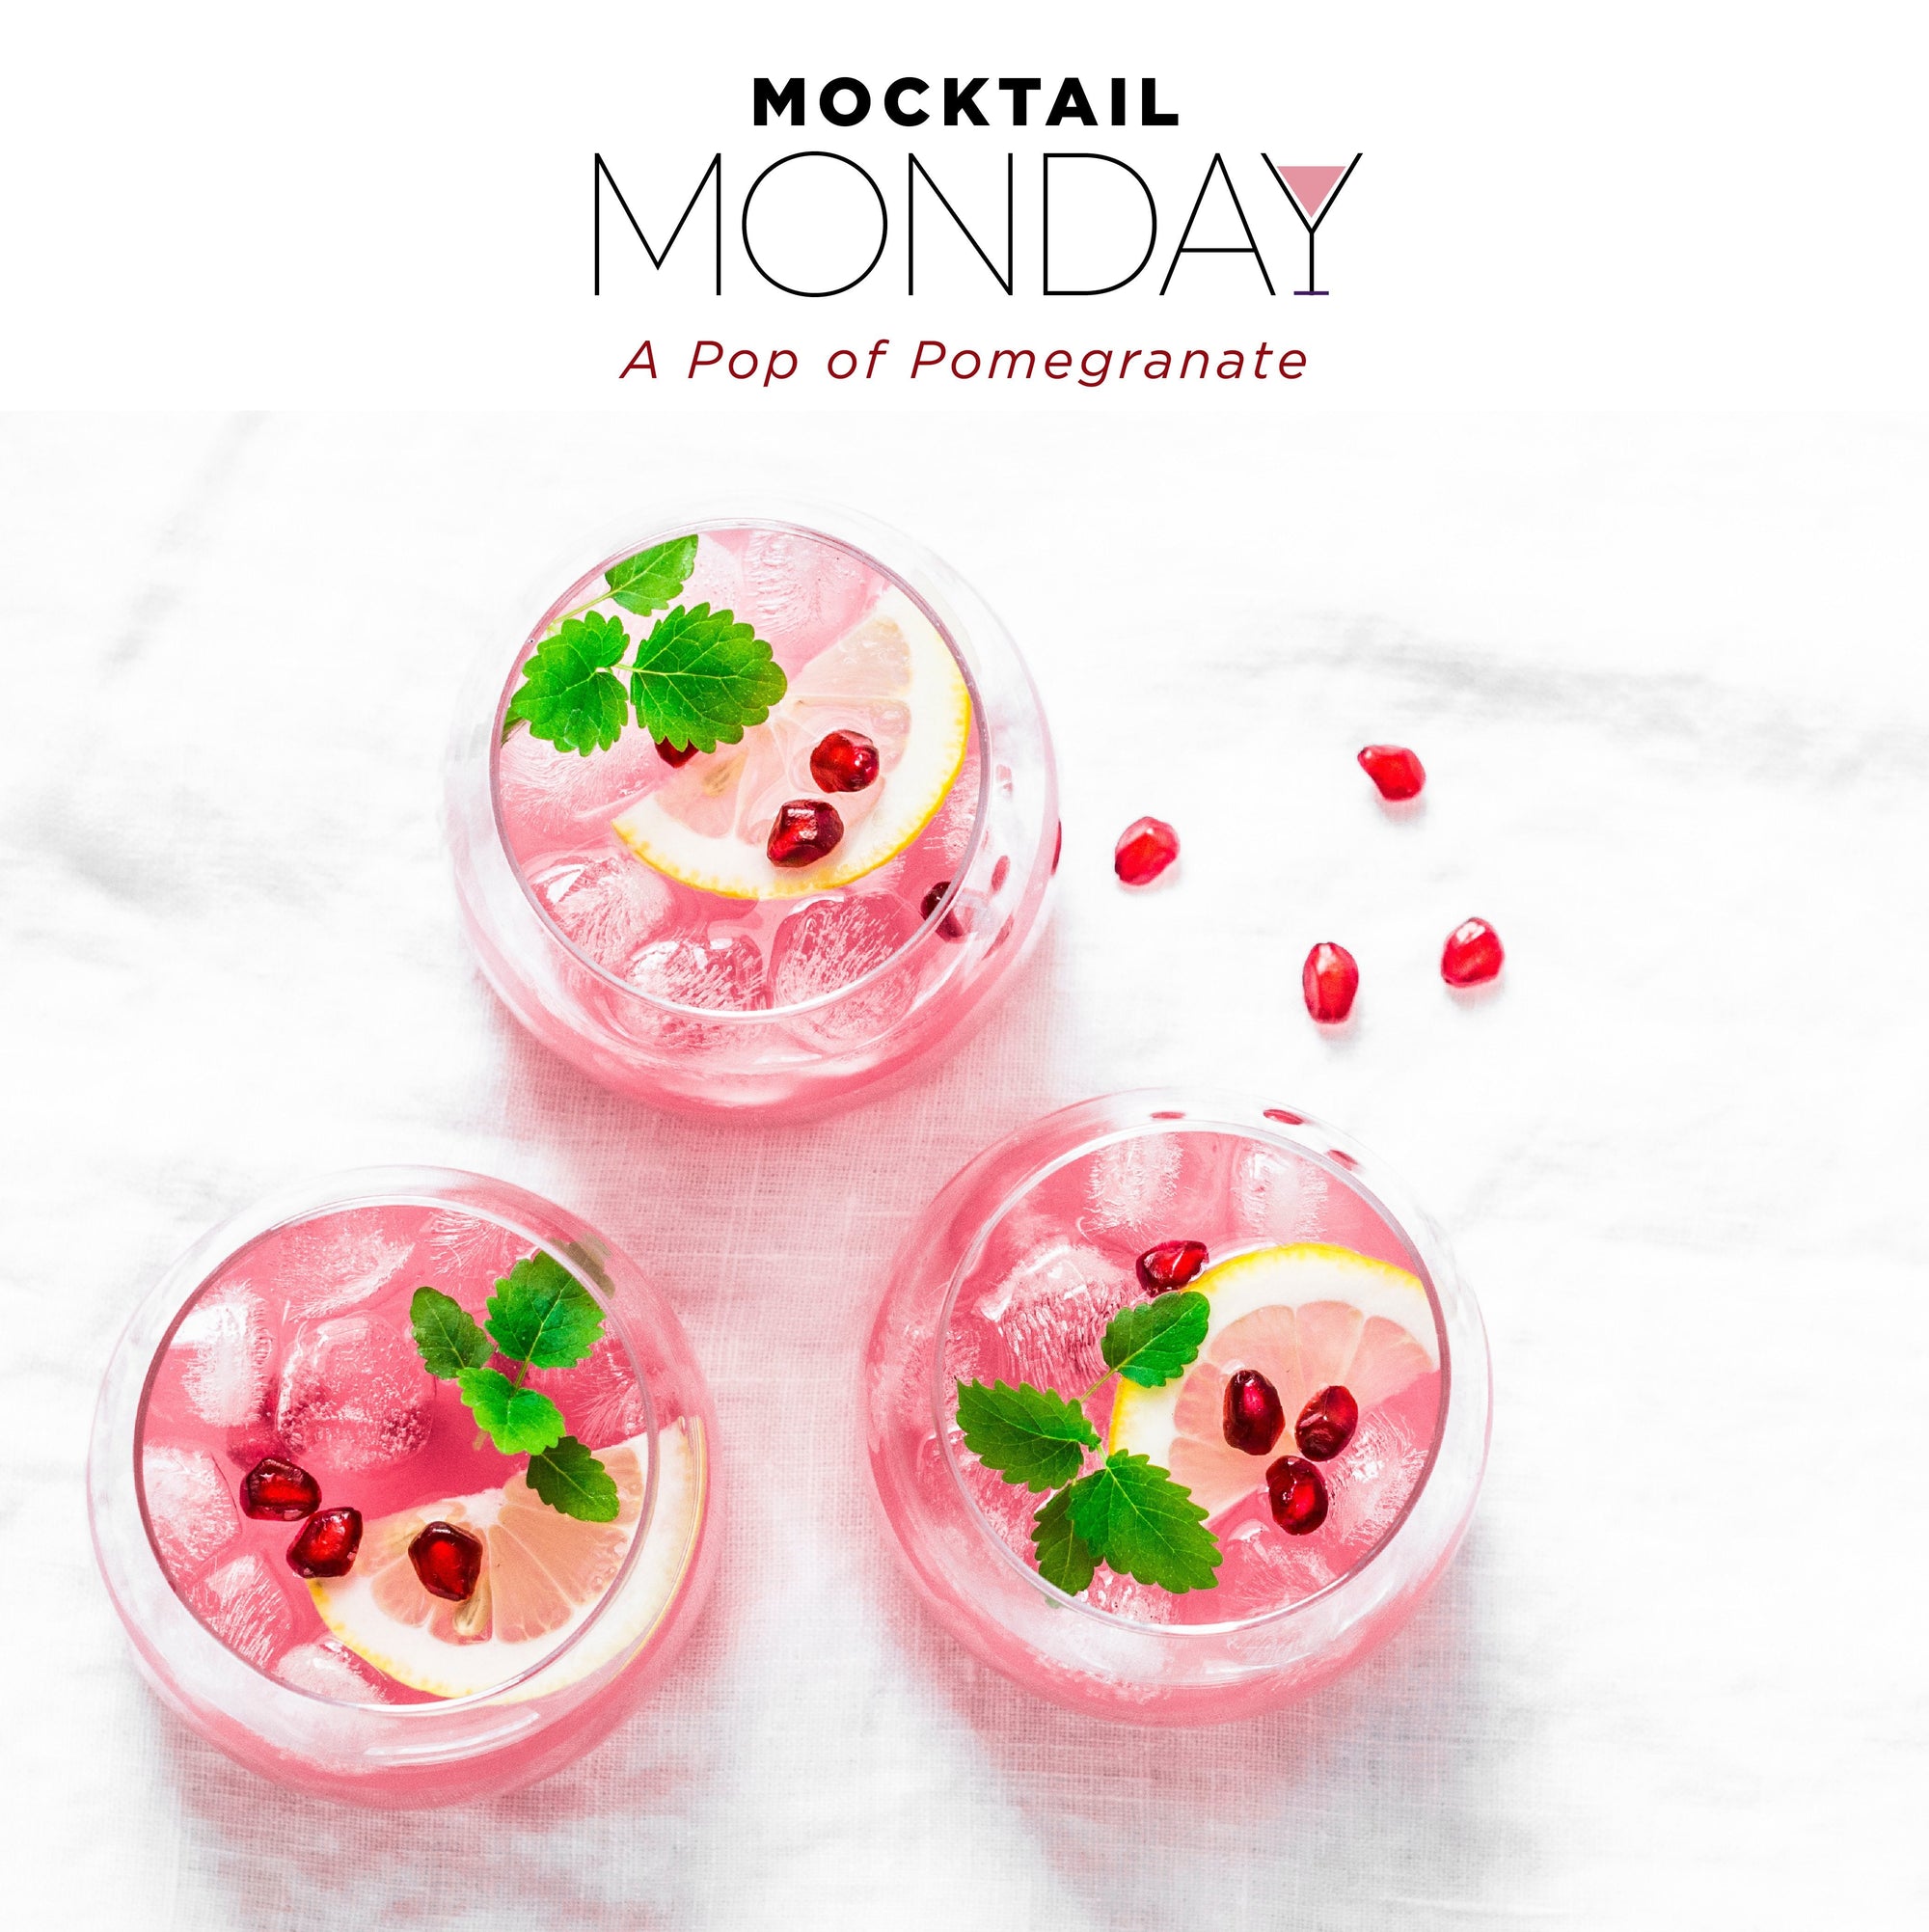 Mocktail Monday: Pomegranate Spritzer Mocktail